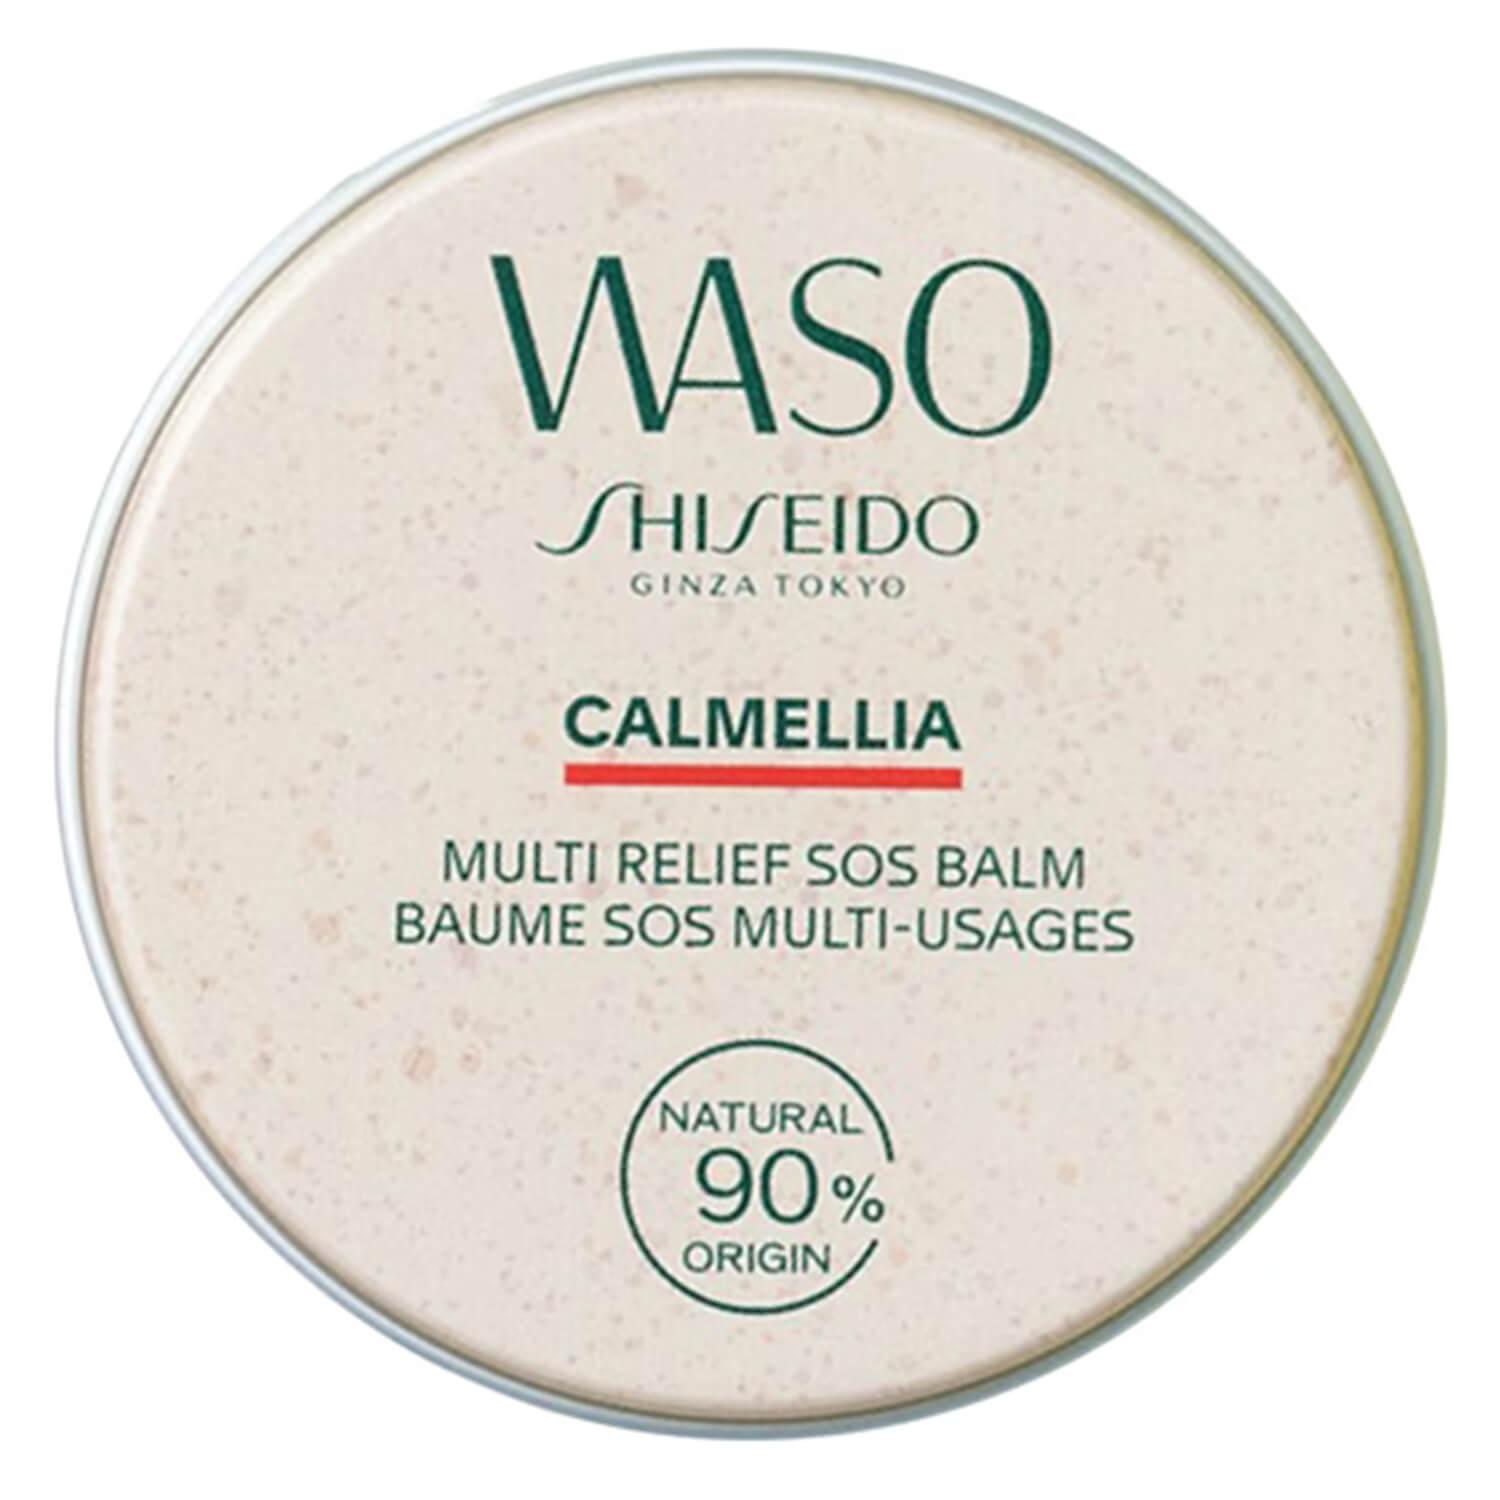 Waso - CALMELLIA Multi-Relief SOS Balm